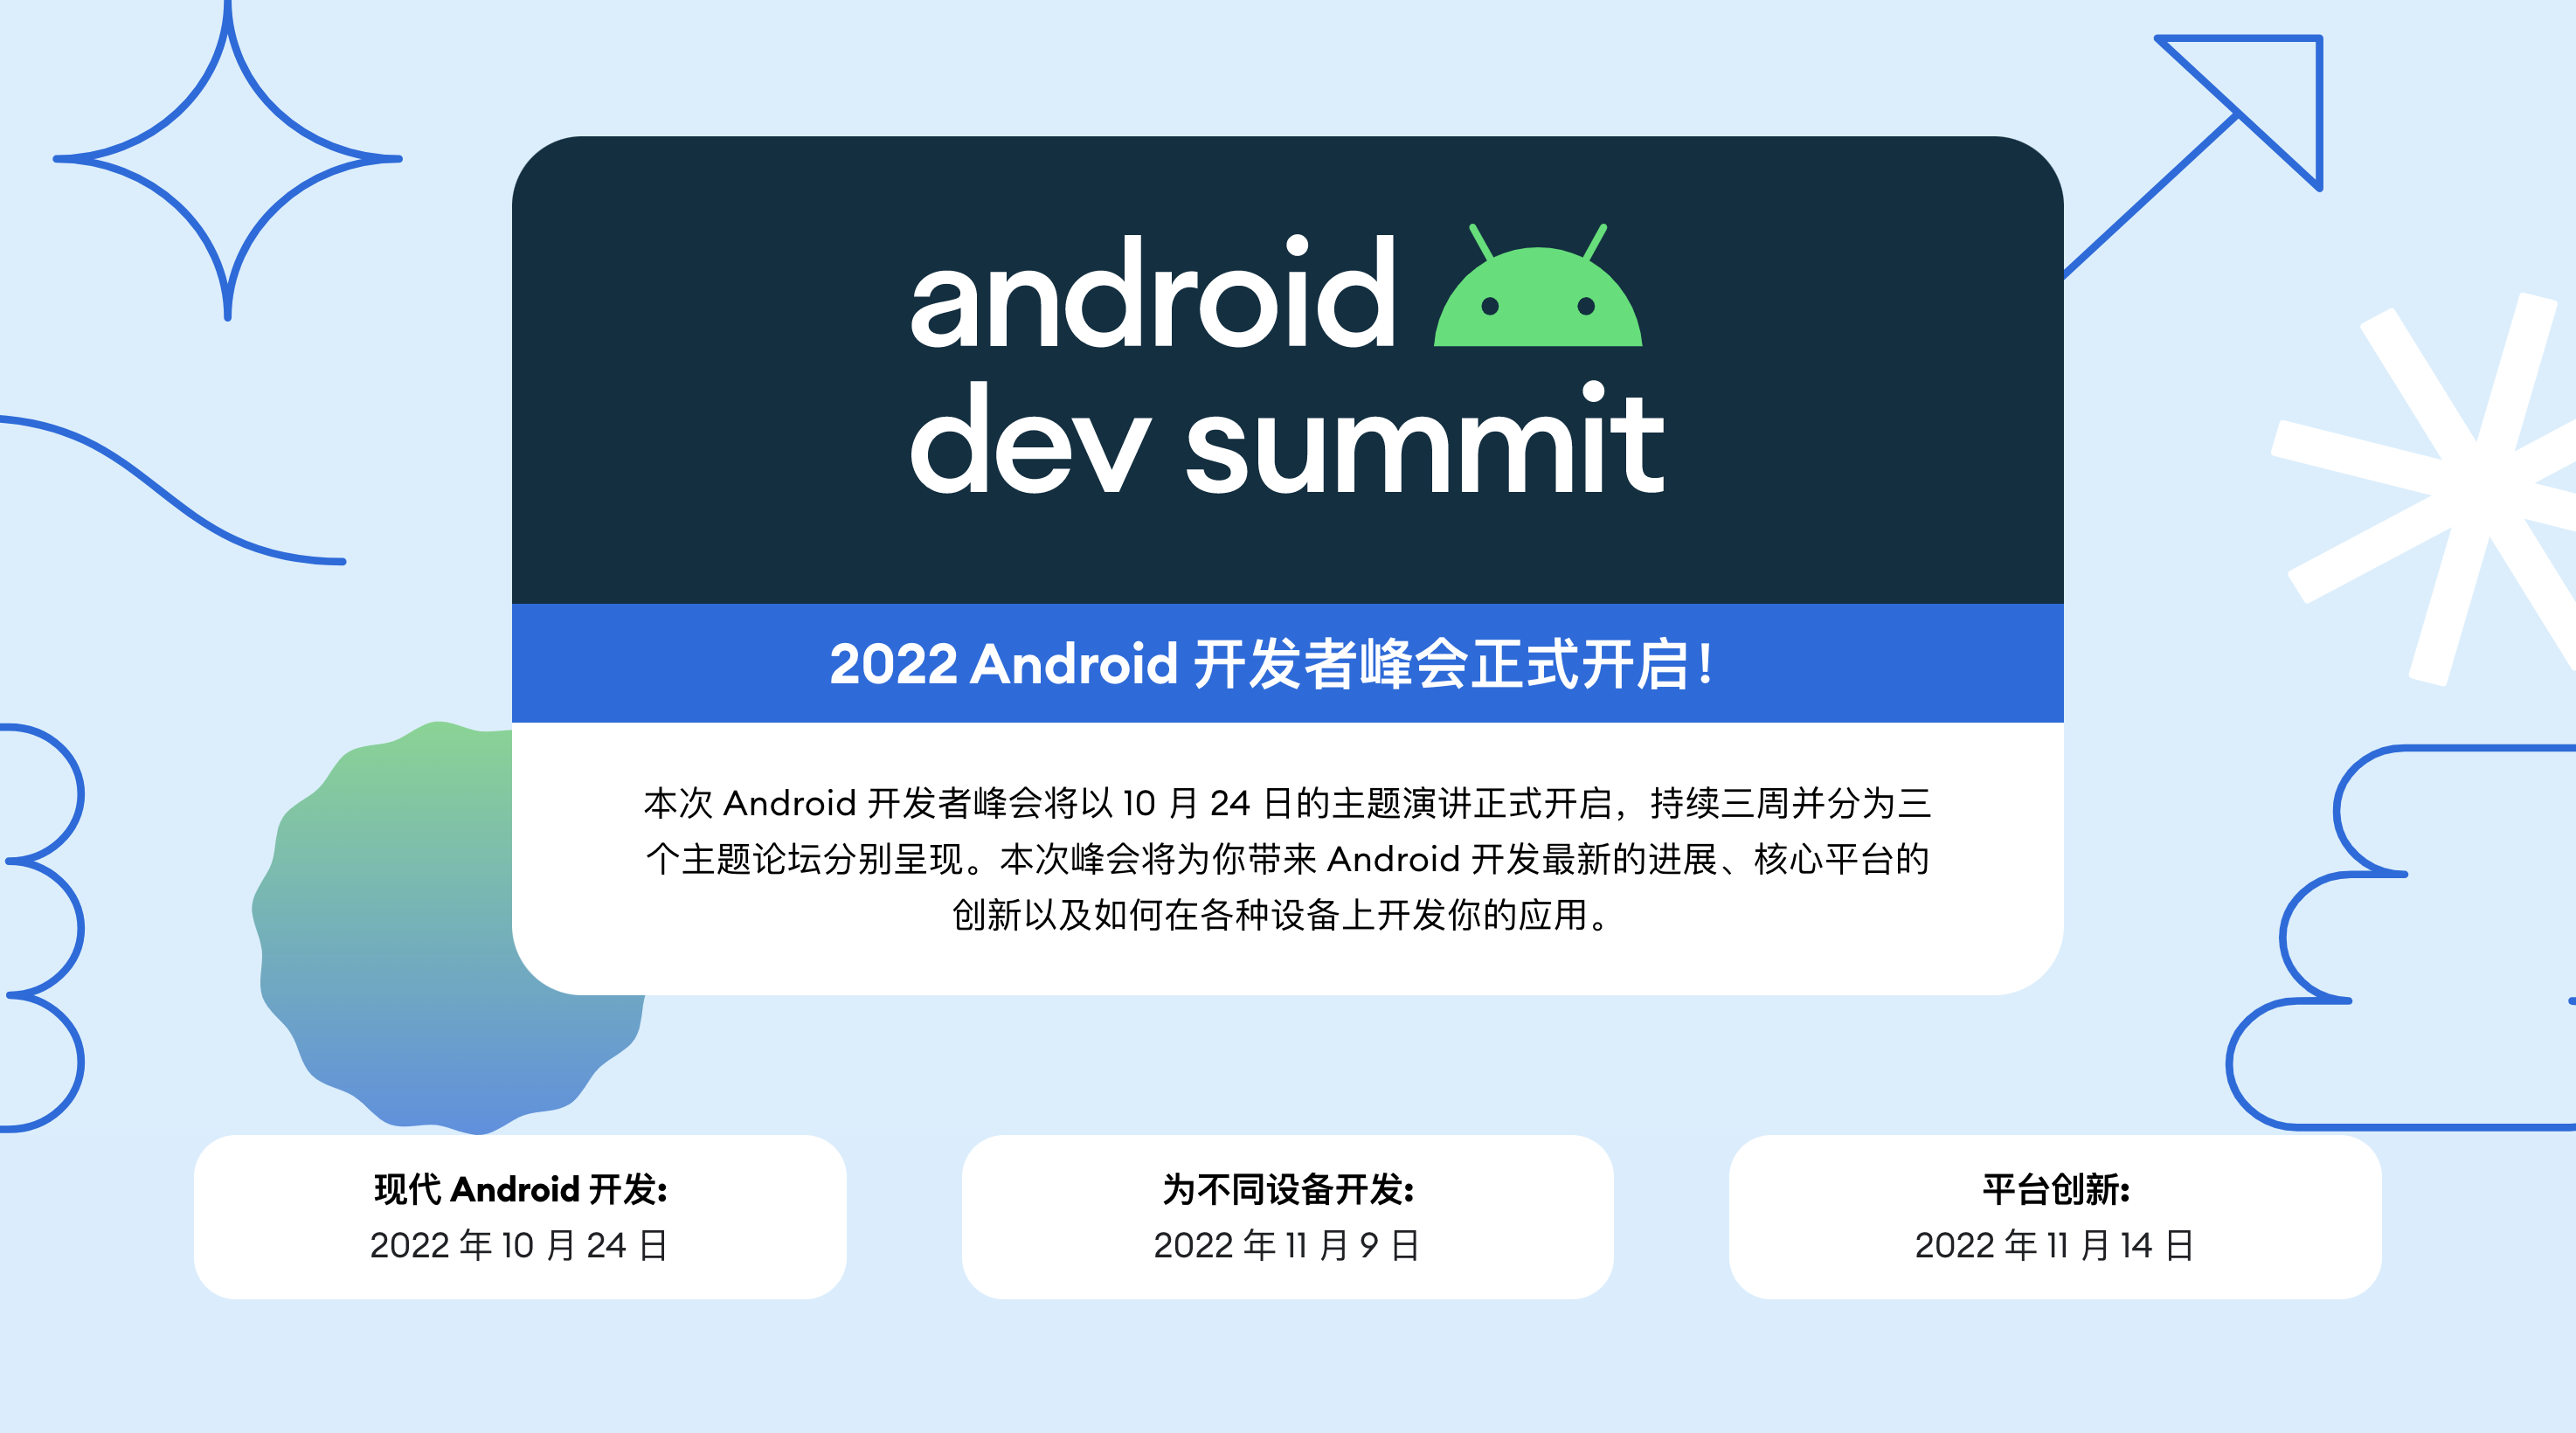 2022 Android 开发者峰会正式开启